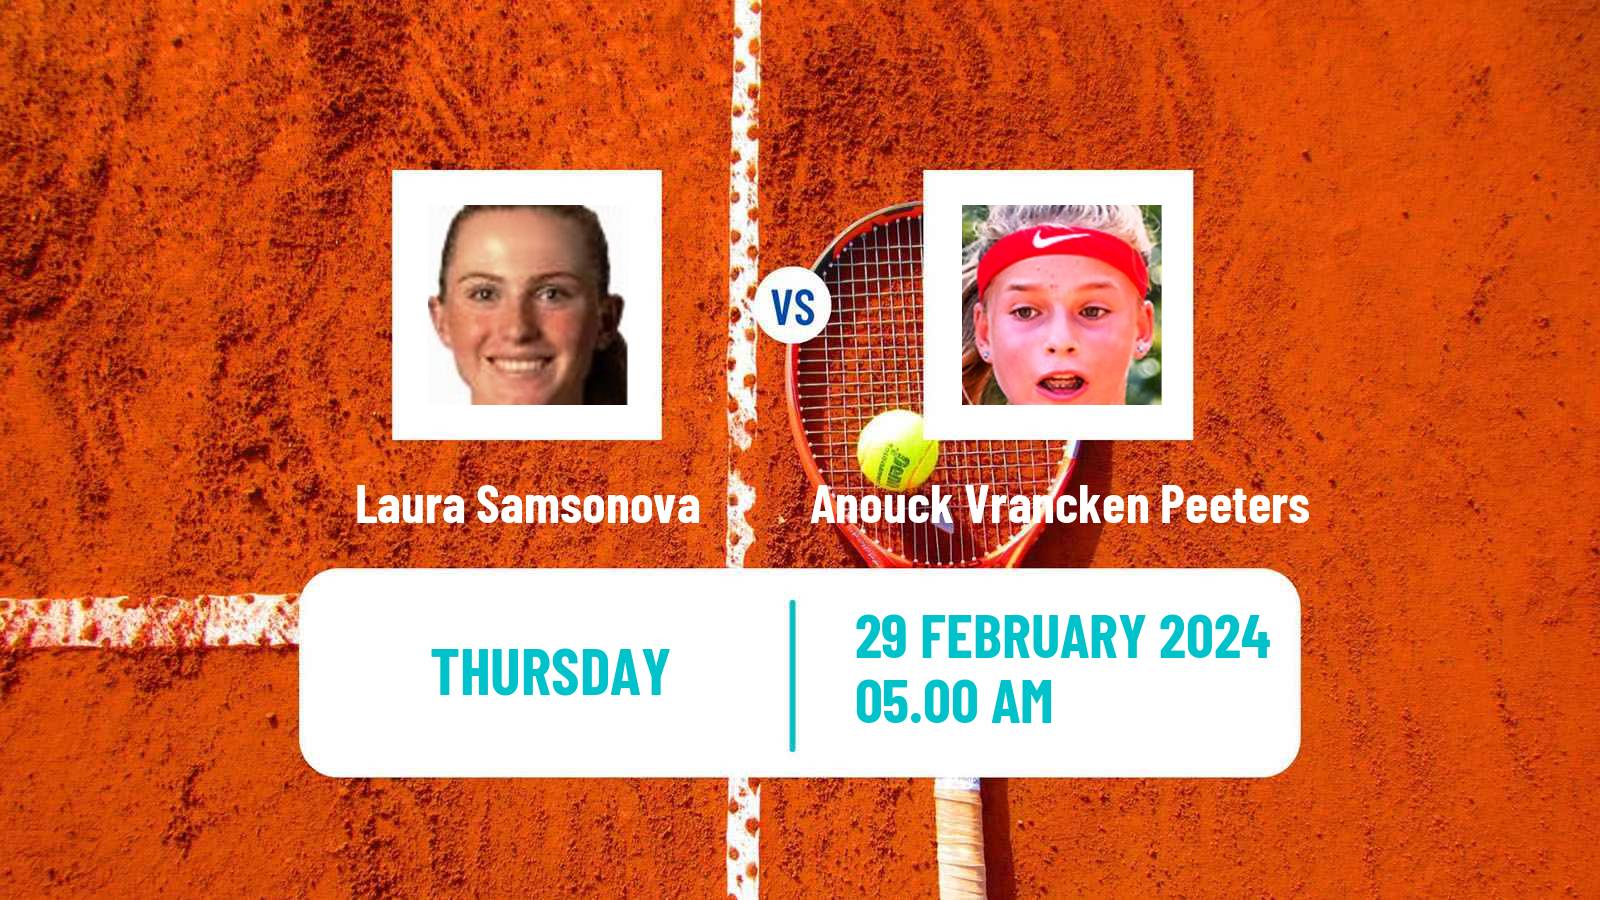 Tennis ITF W15 Sharm Elsheikh 4 Women Laura Samsonova - Anouck Vrancken Peeters